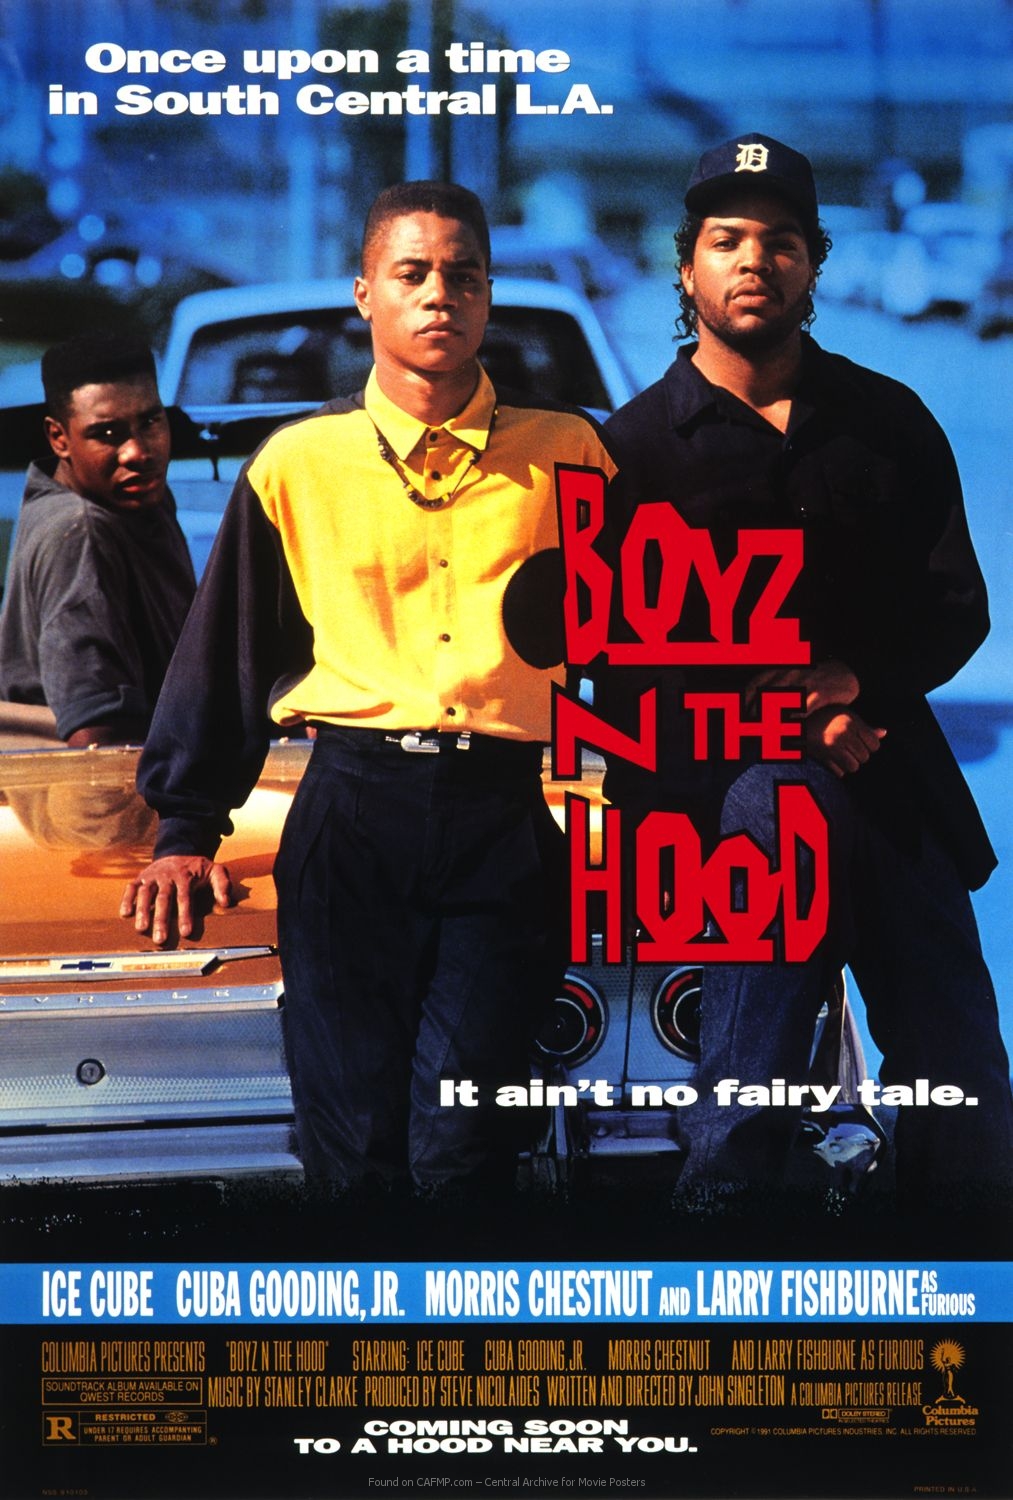 boyz n the hood furious